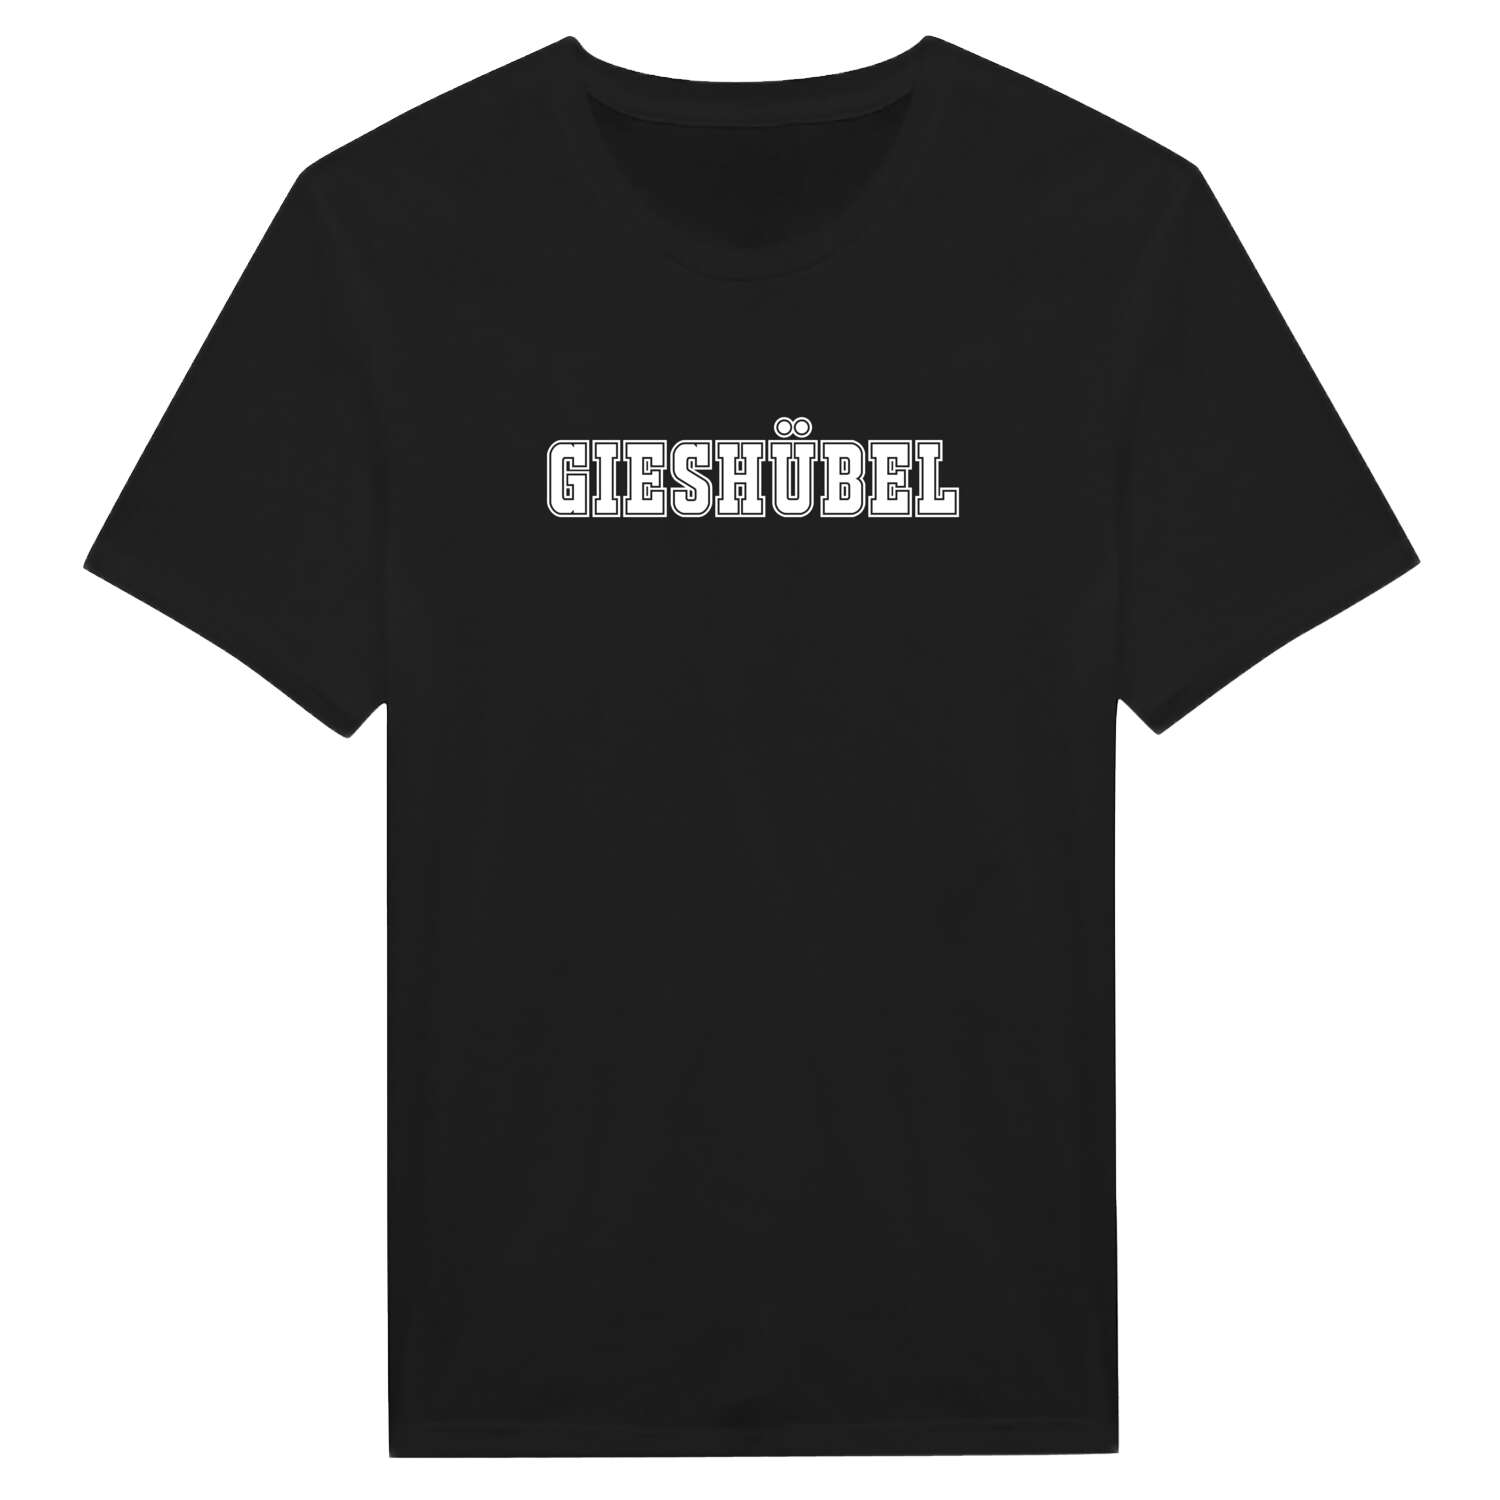 Gieshübel T-Shirt »Classic«